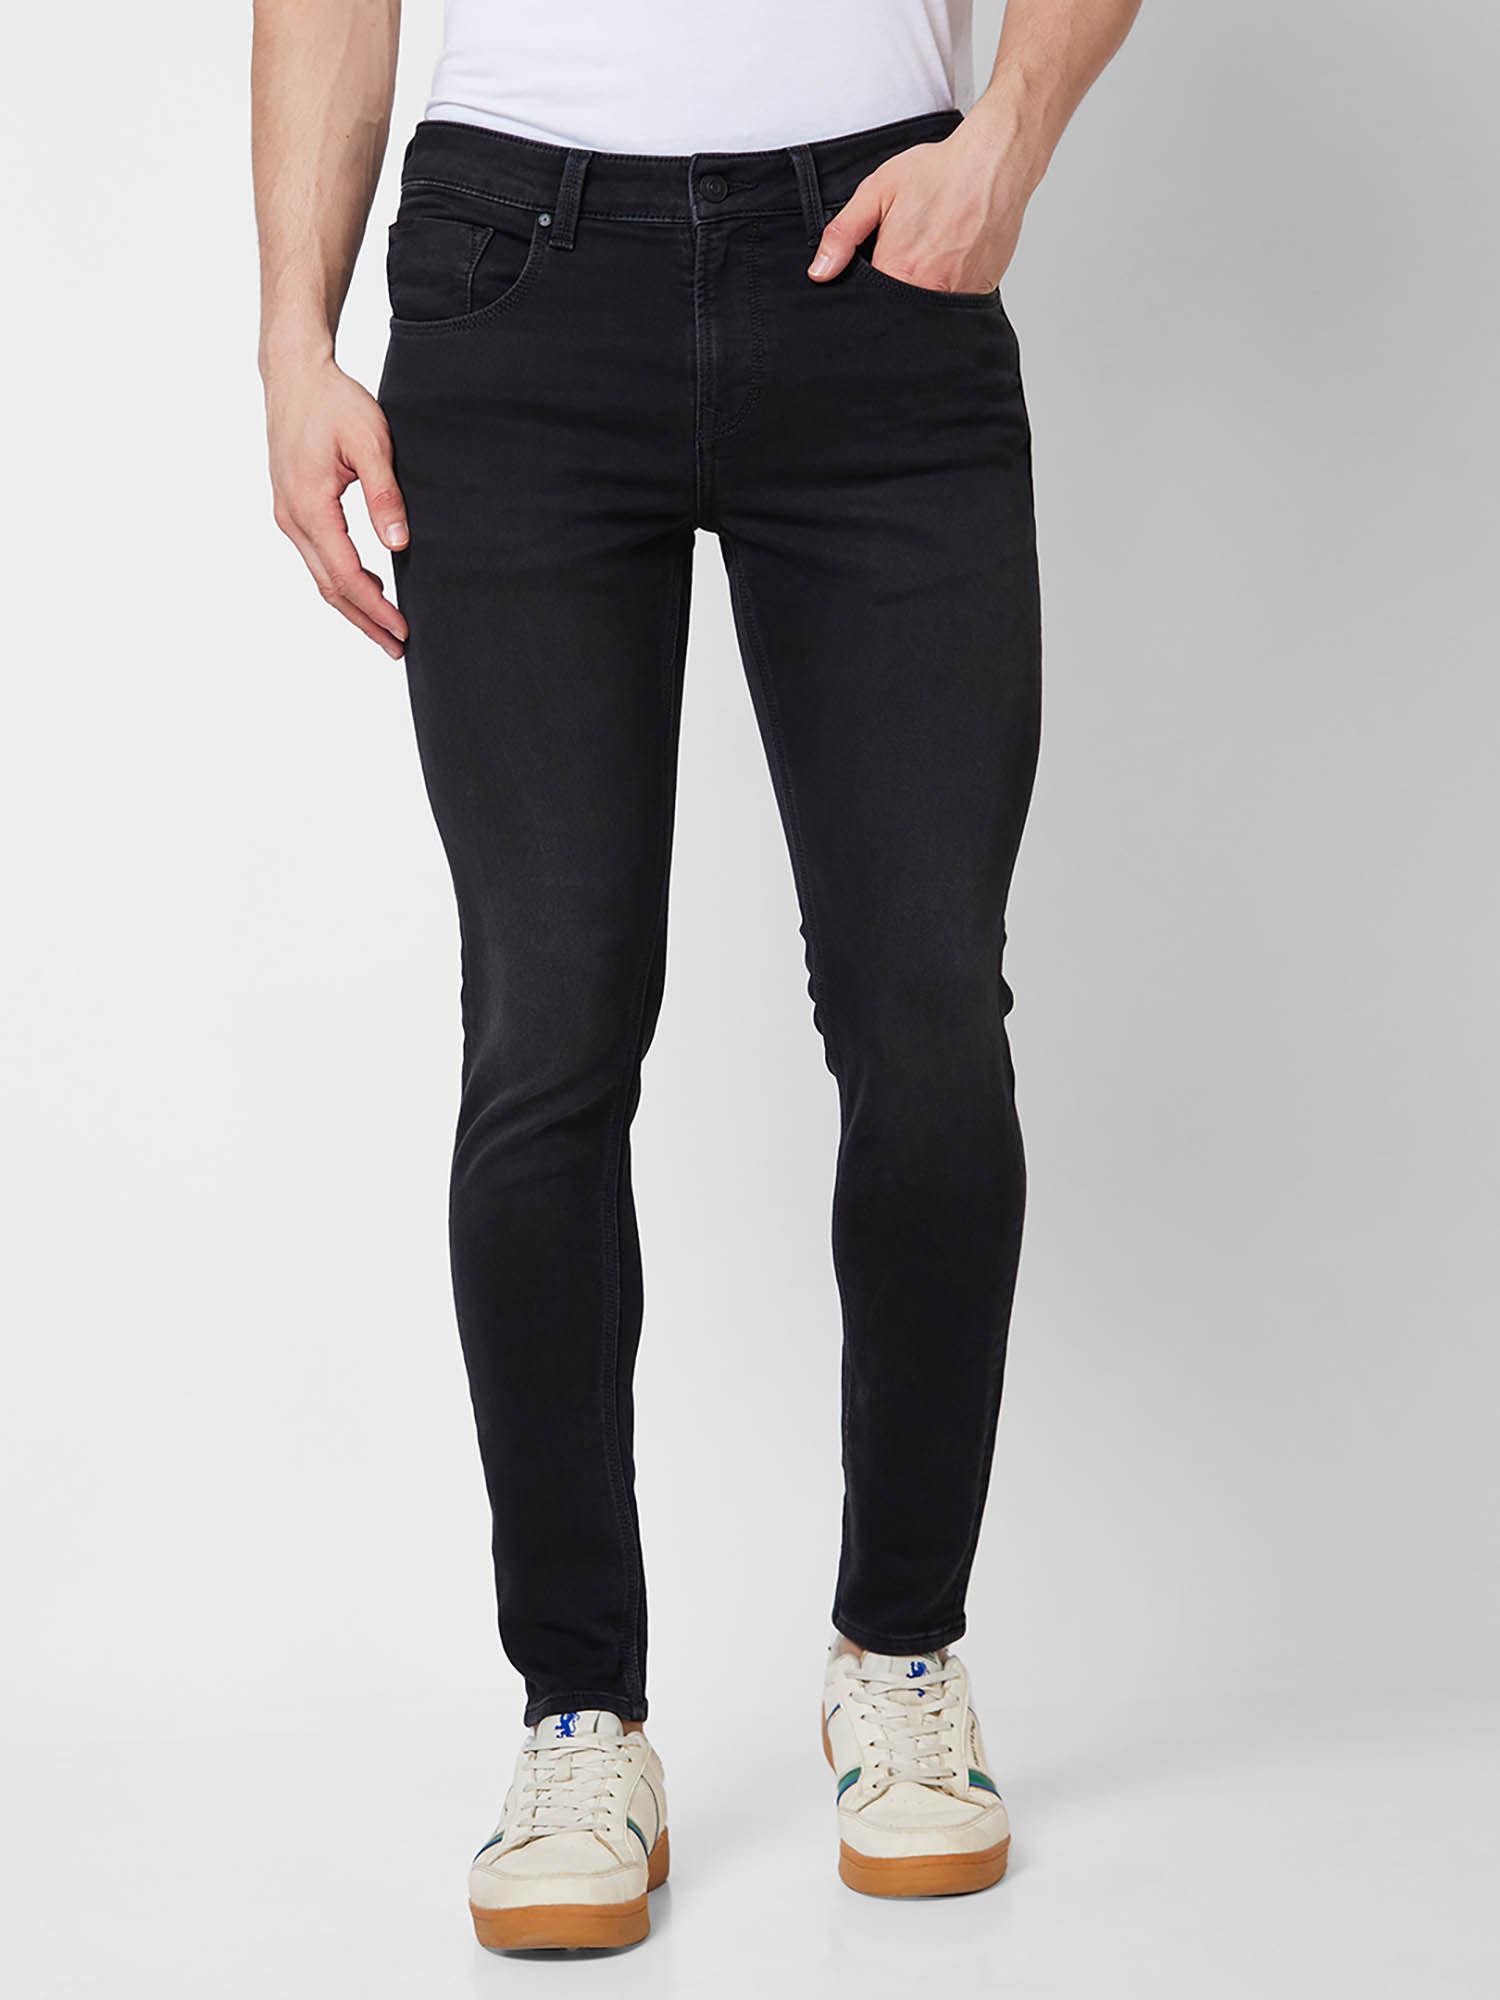 Low Rise Super Slim Fit Black Jeans for Men